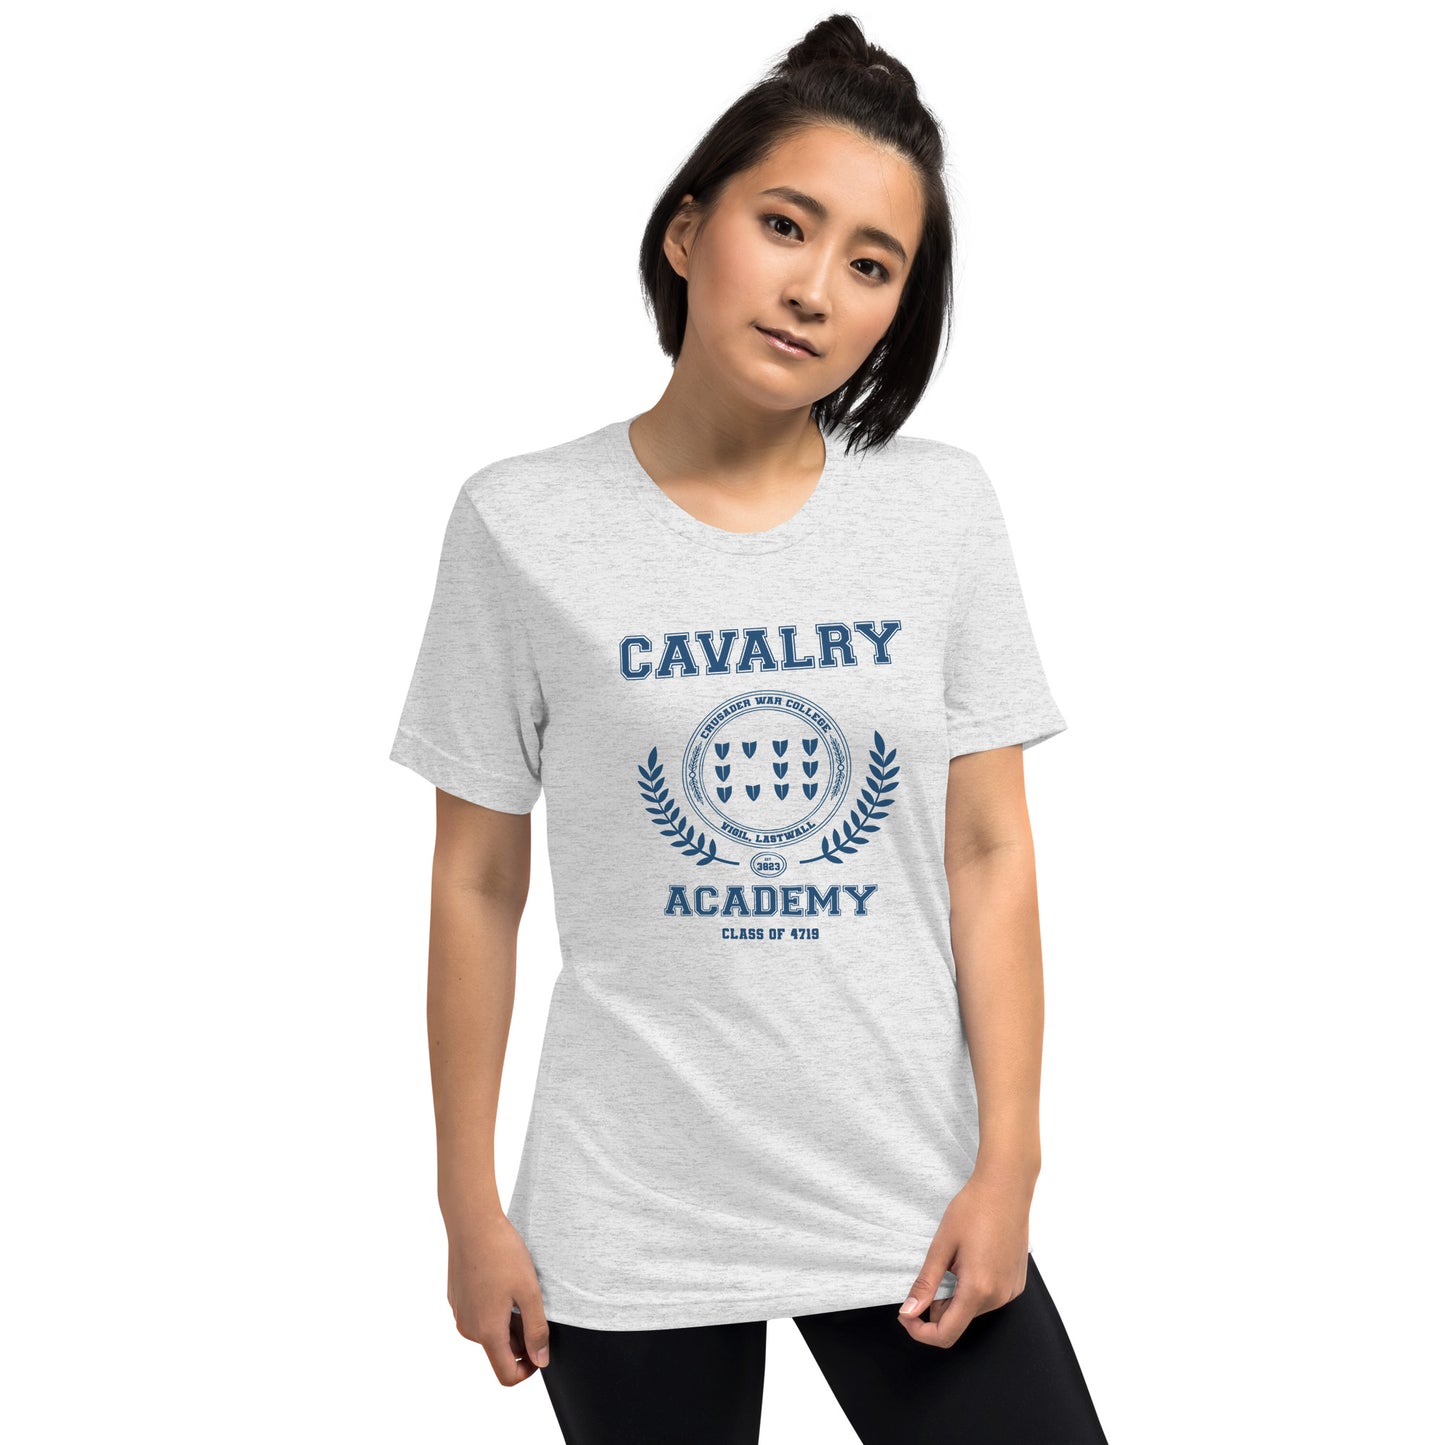 Crusader War College Shirt - Cavalry Academy